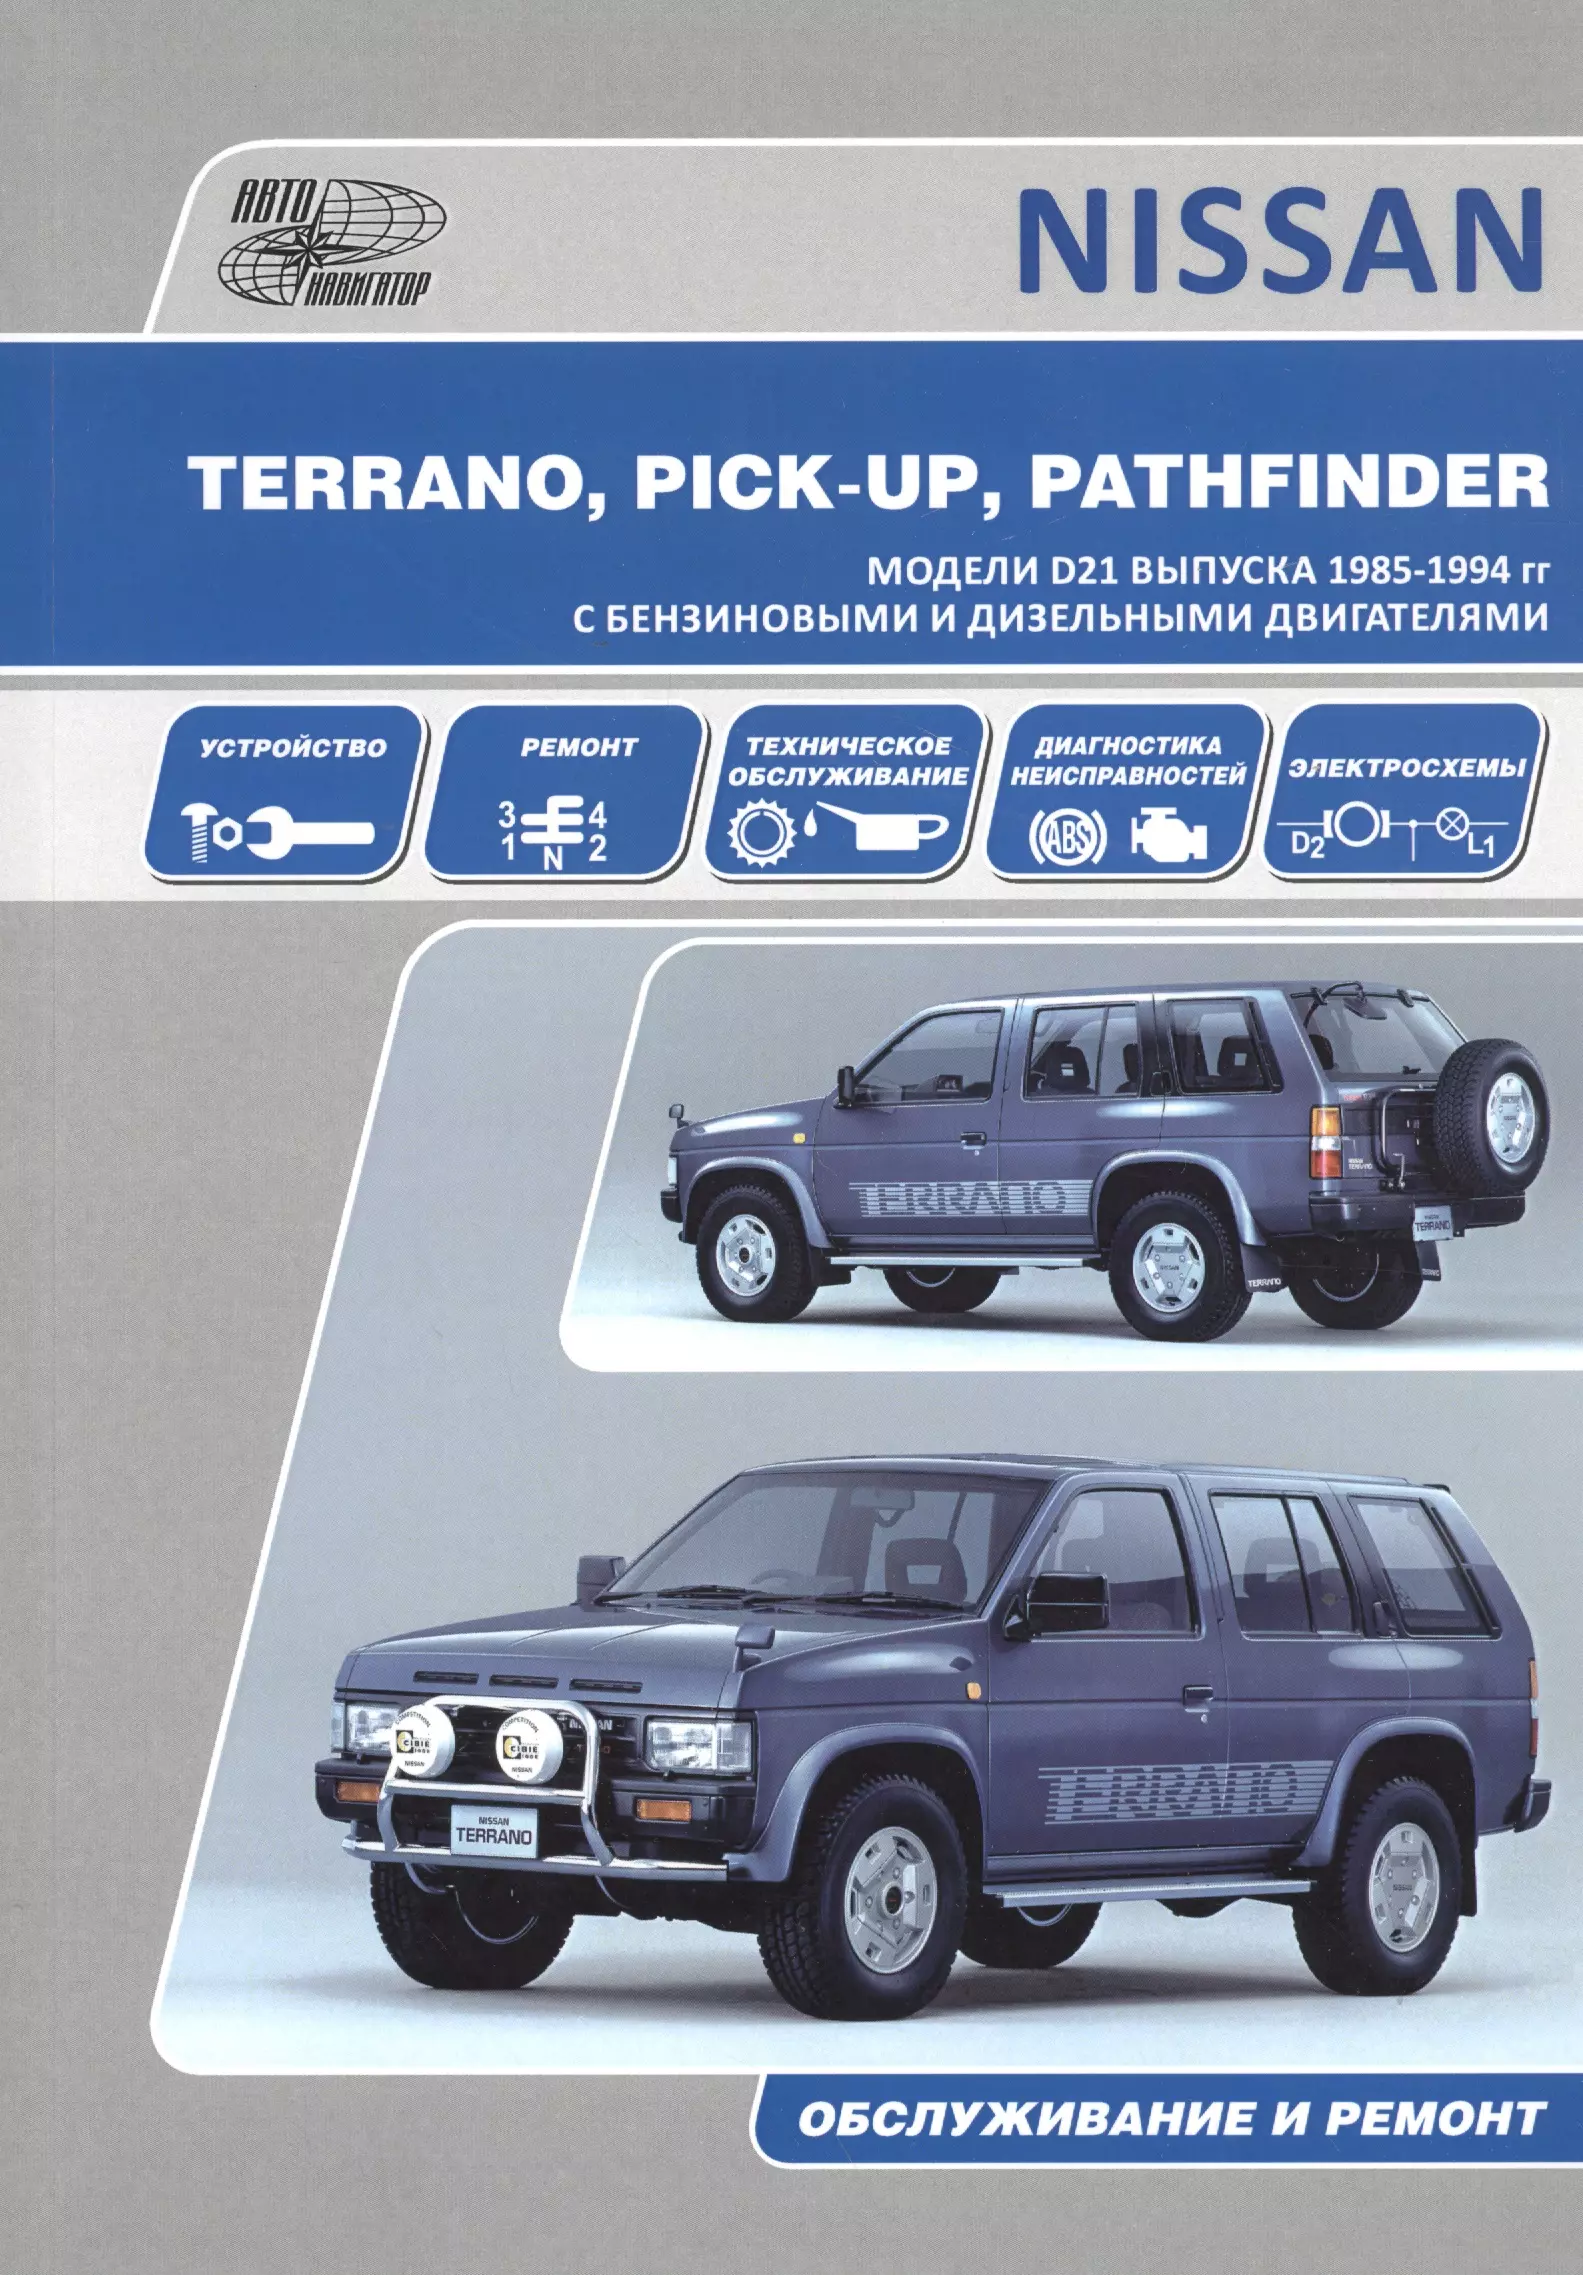 Nissan Terrano Pick Up Pathfinder Мод. D21 вып. 1985-1994 гг. с бенз. двигат. Z16S (м) subaru forester мод вып 2008 2011 гг с бенз двигат dohc 2 0 л м